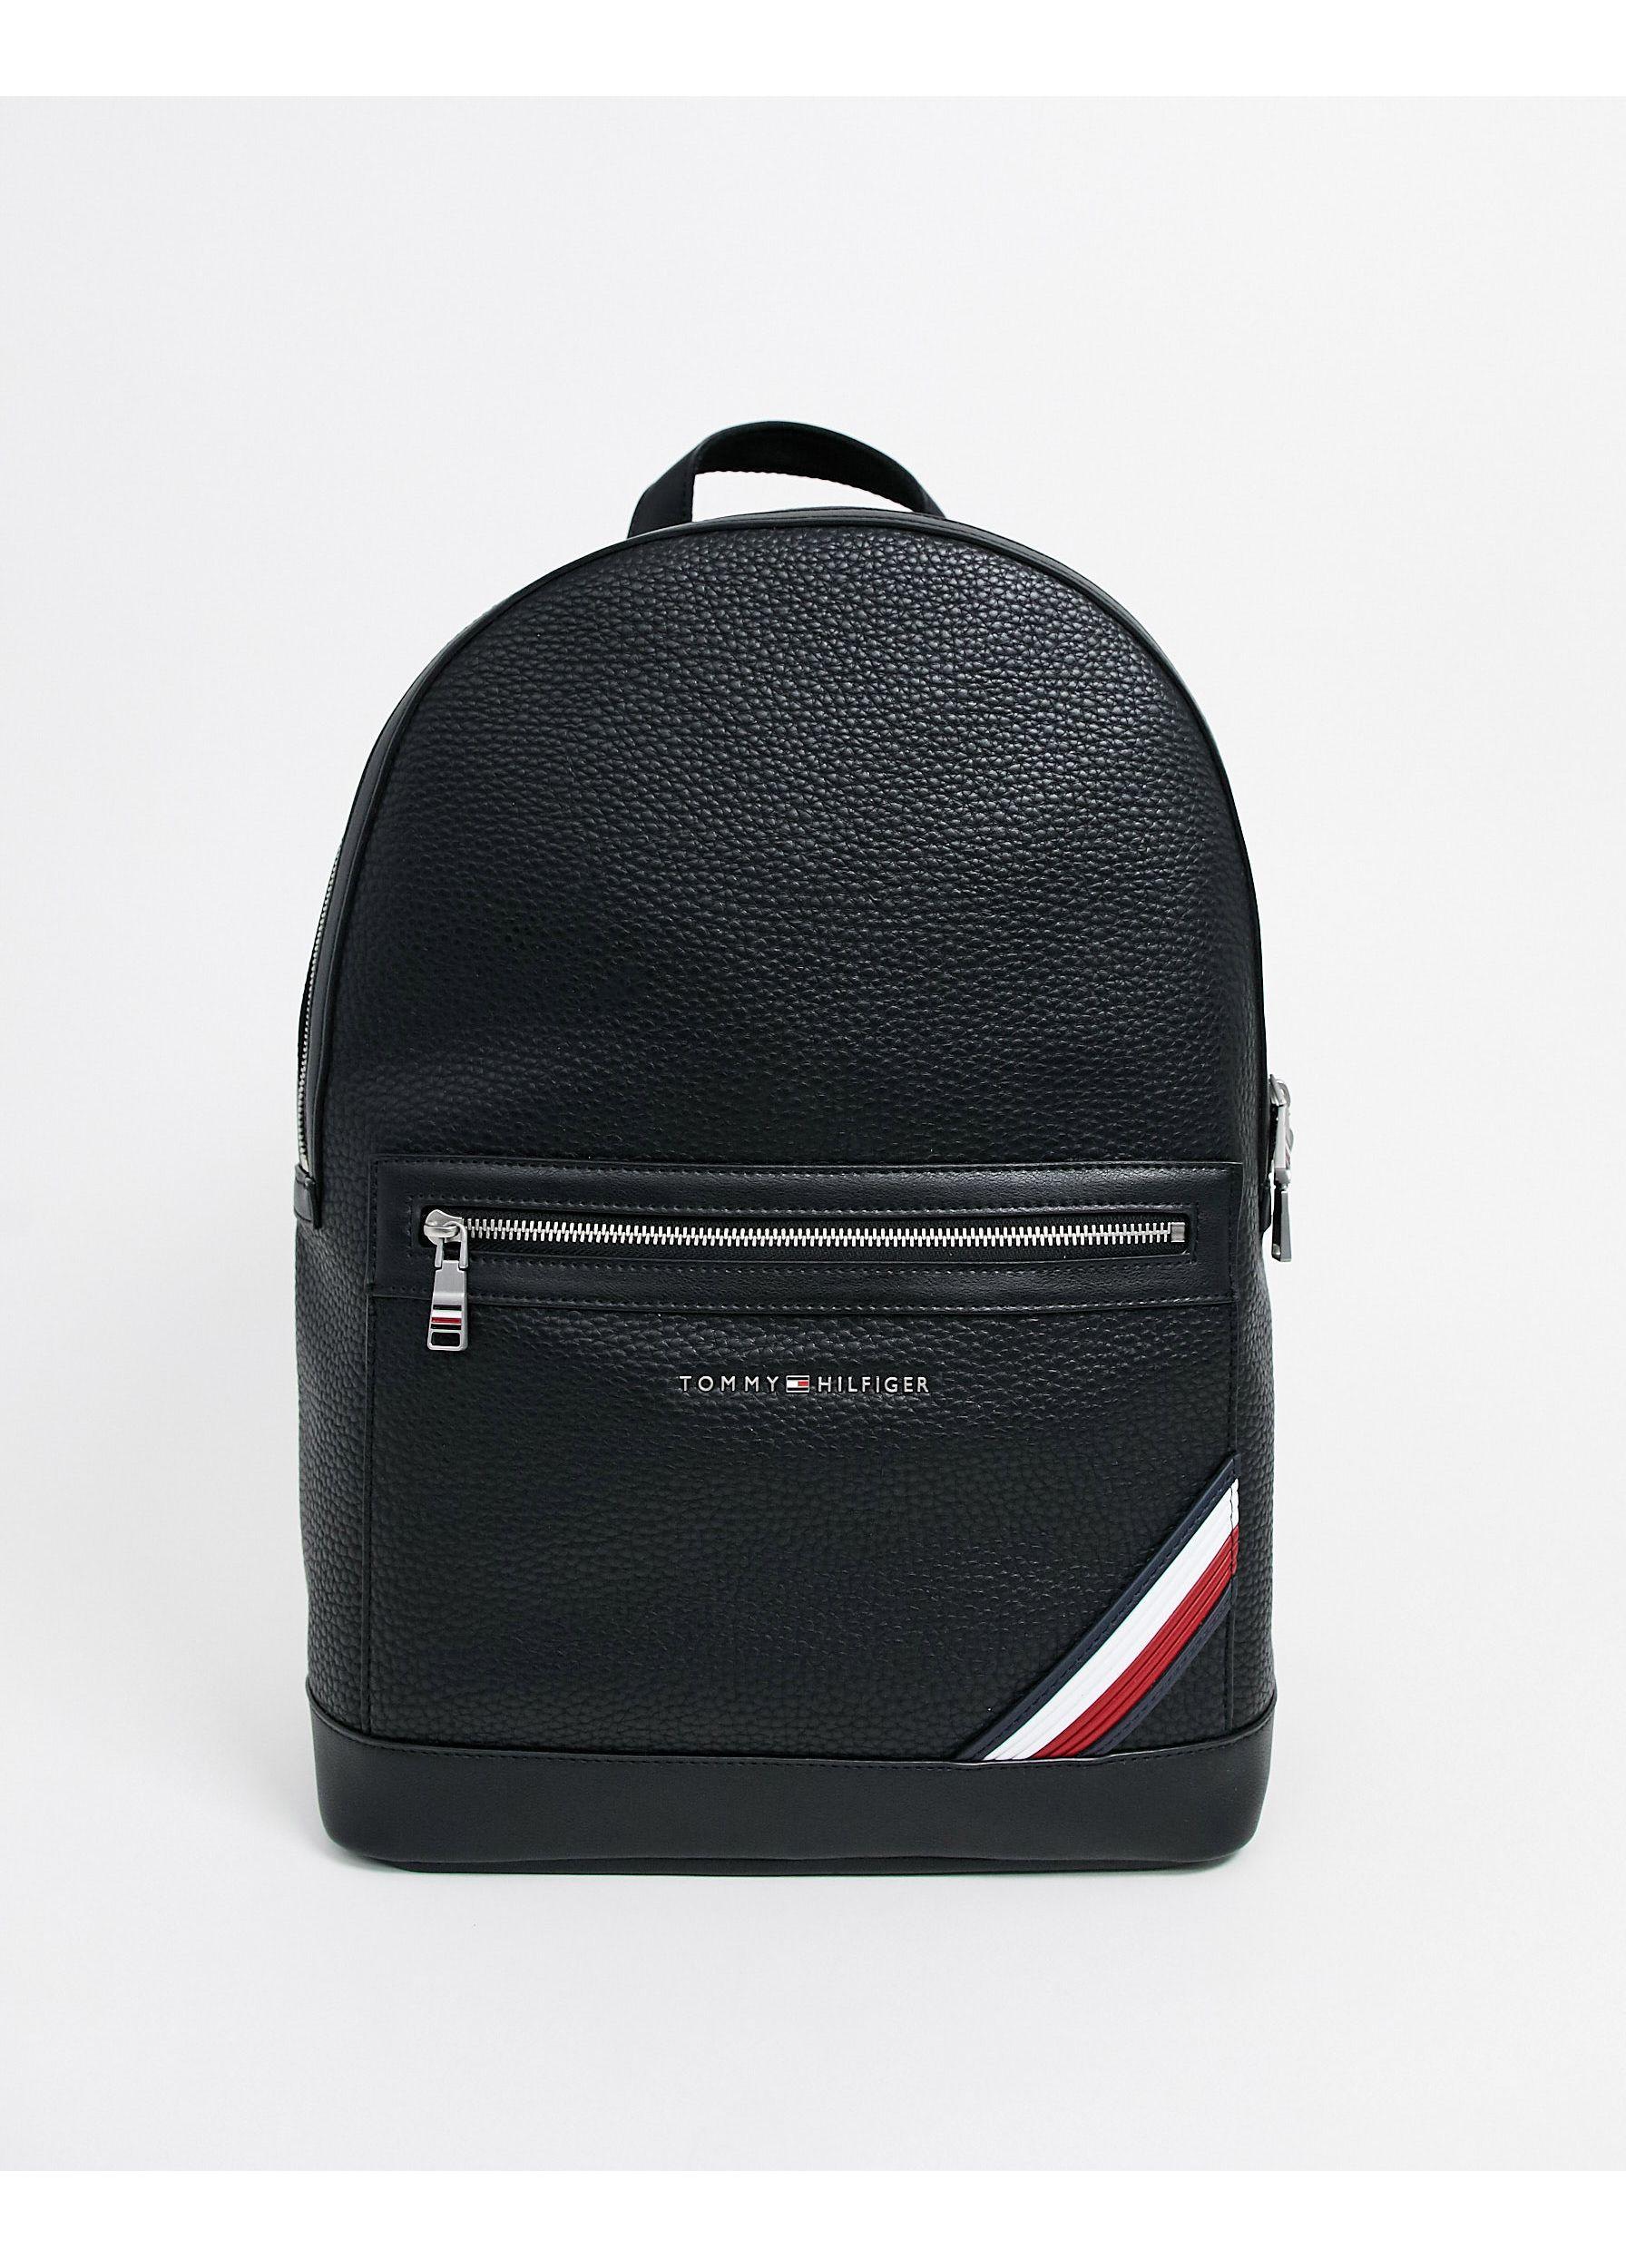 Tommy Hilfiger Downtown Backpack in Black for Men - Lyst